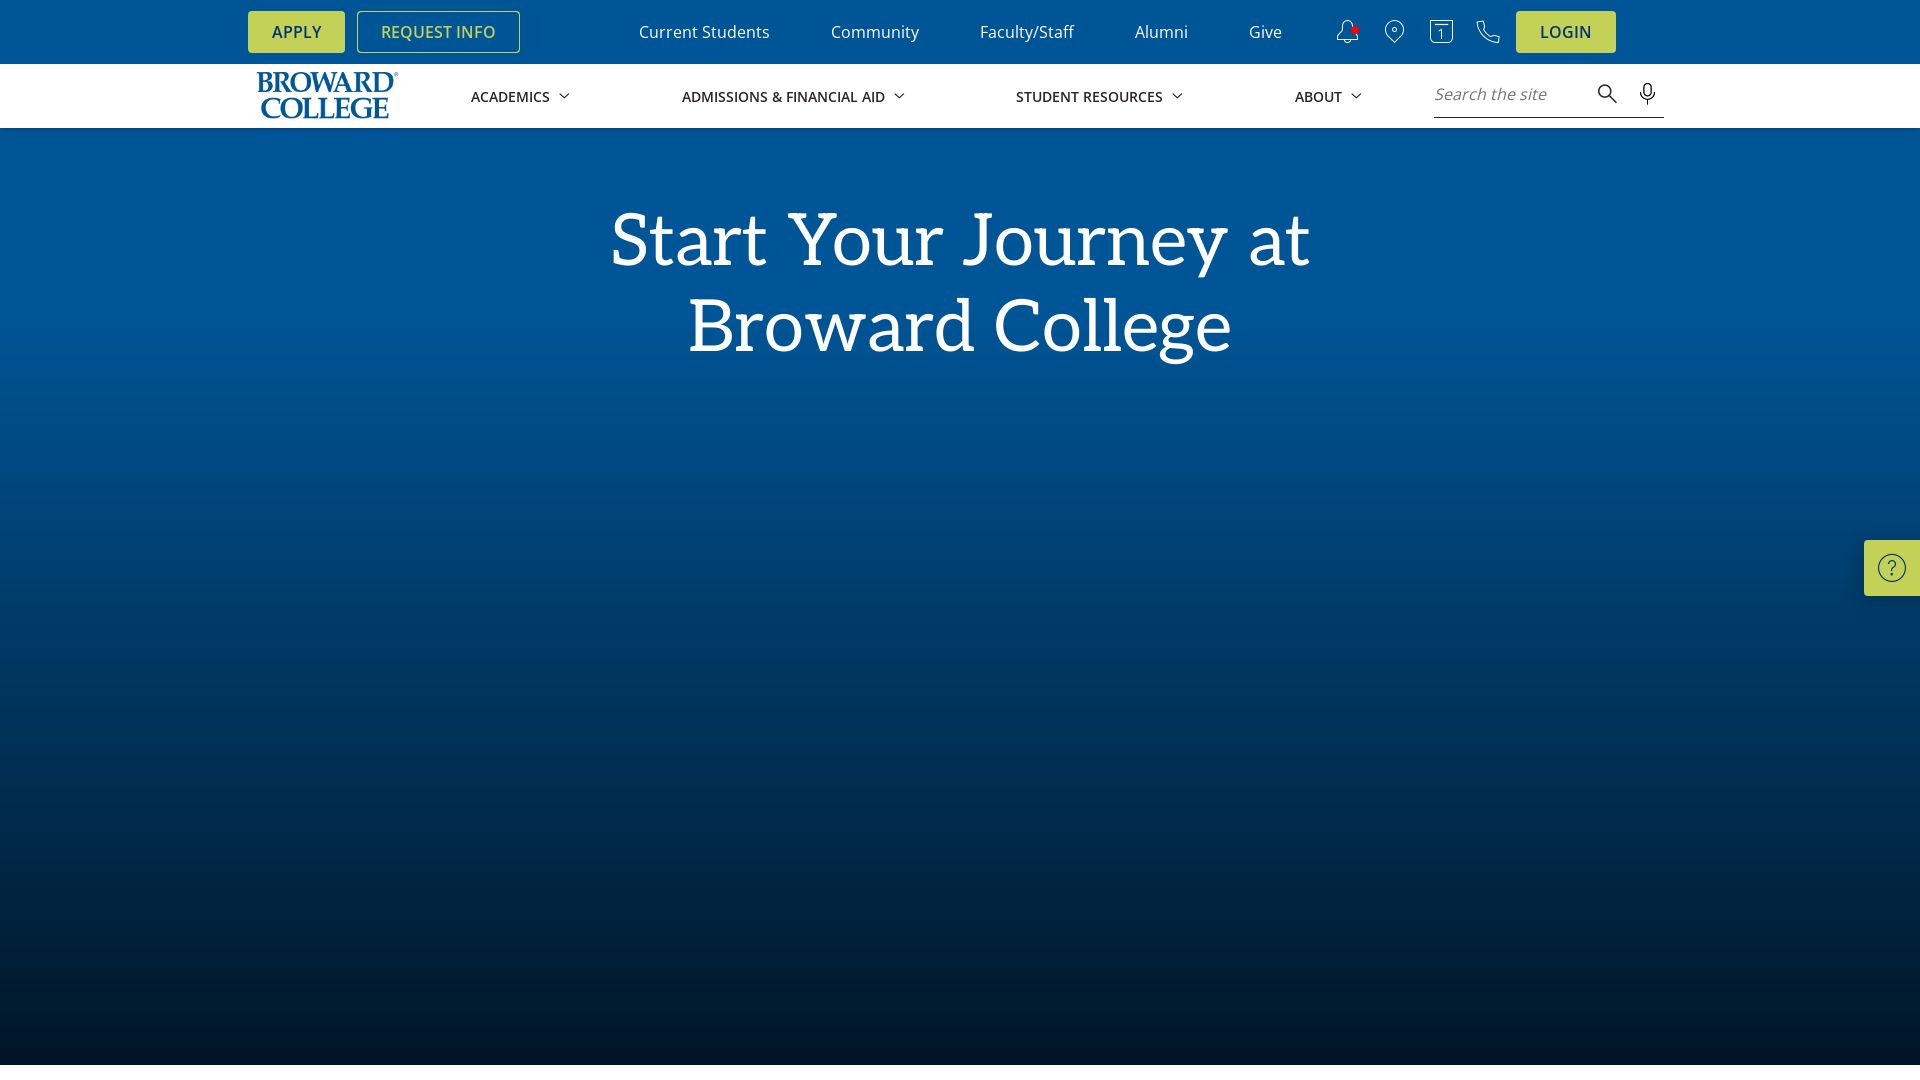 Estado web broward.edu está   ONLINE